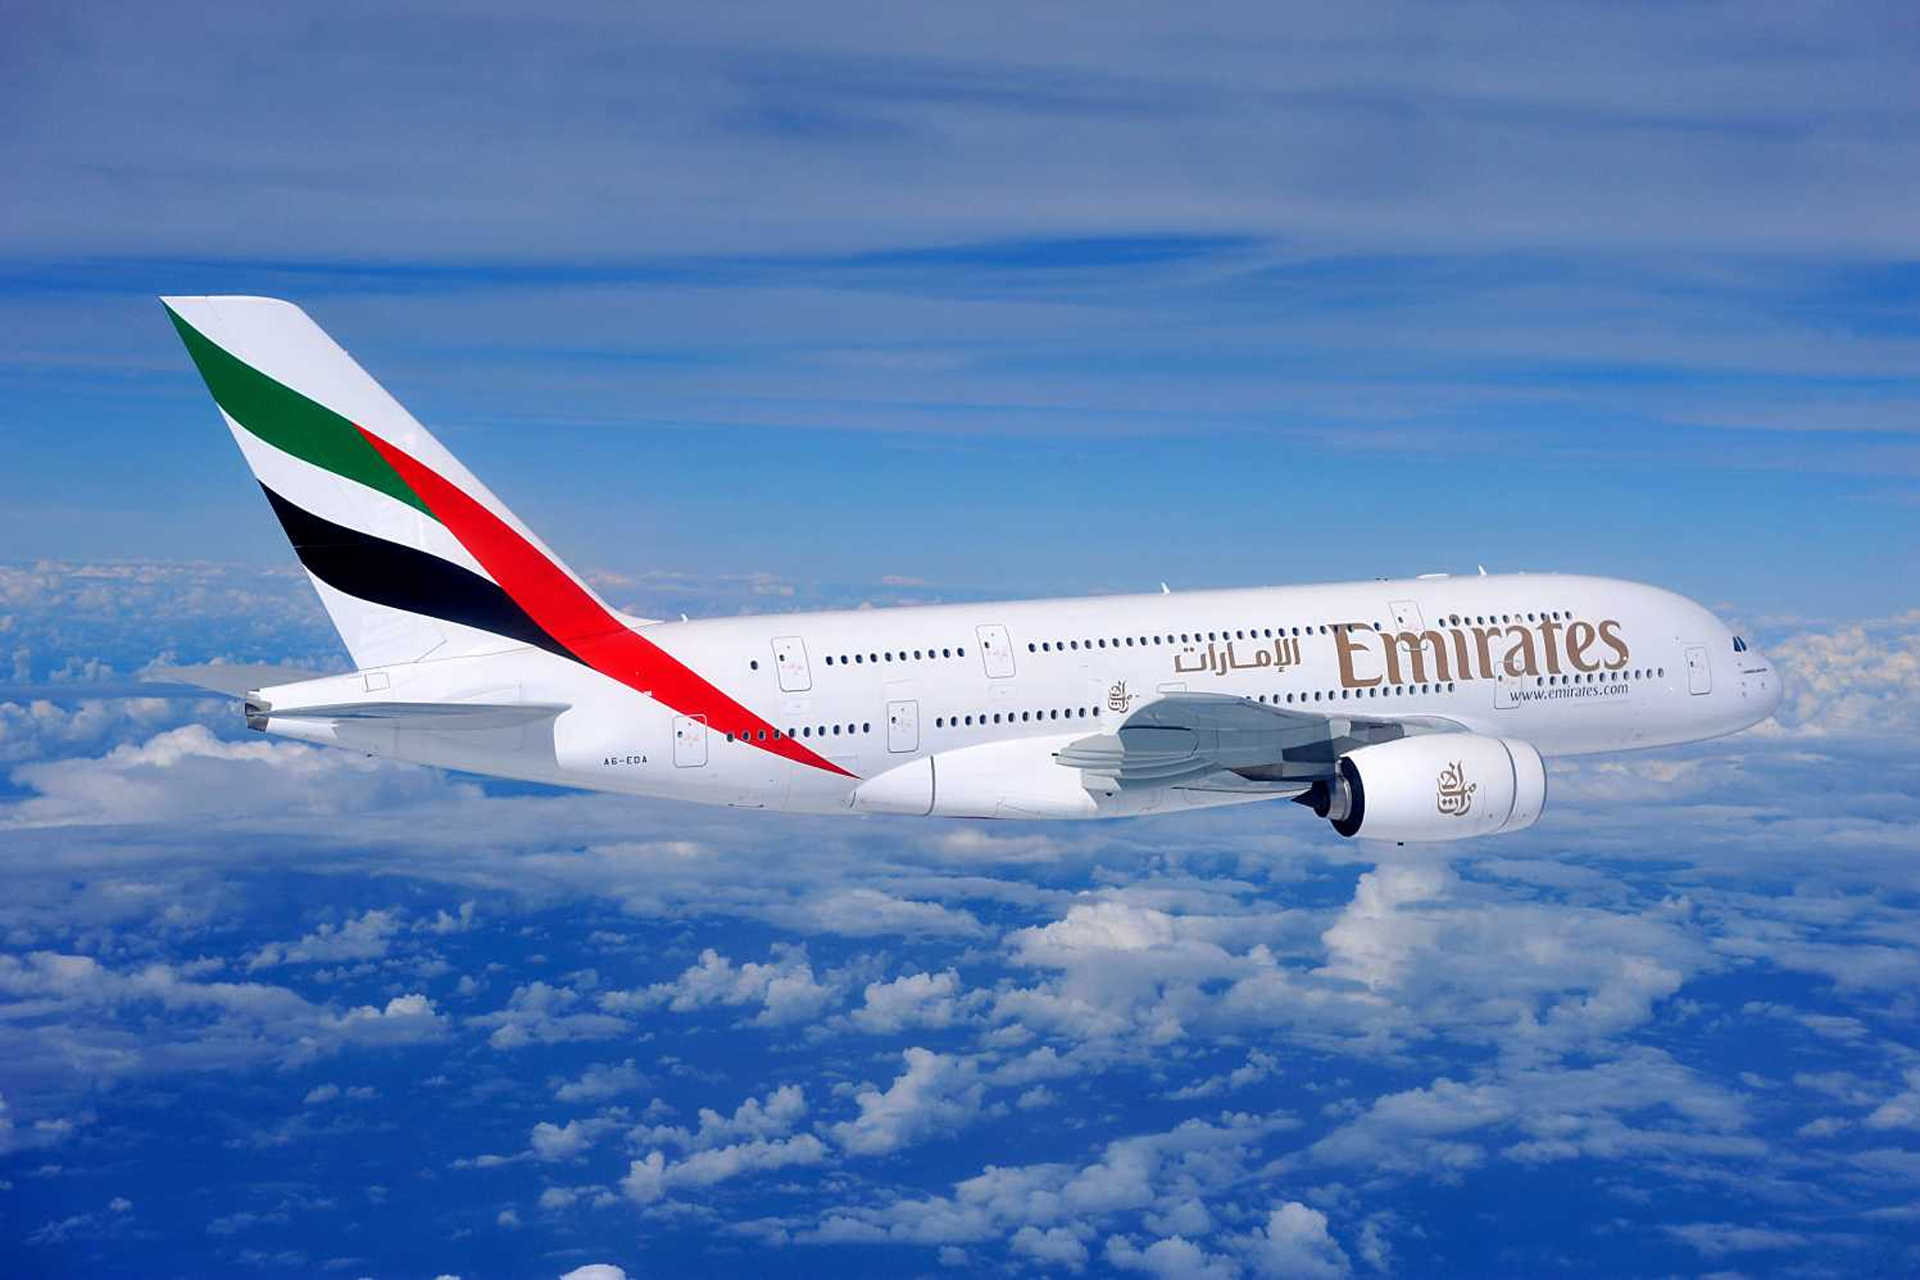 Emirates Airlines Flying to Dubai UAE